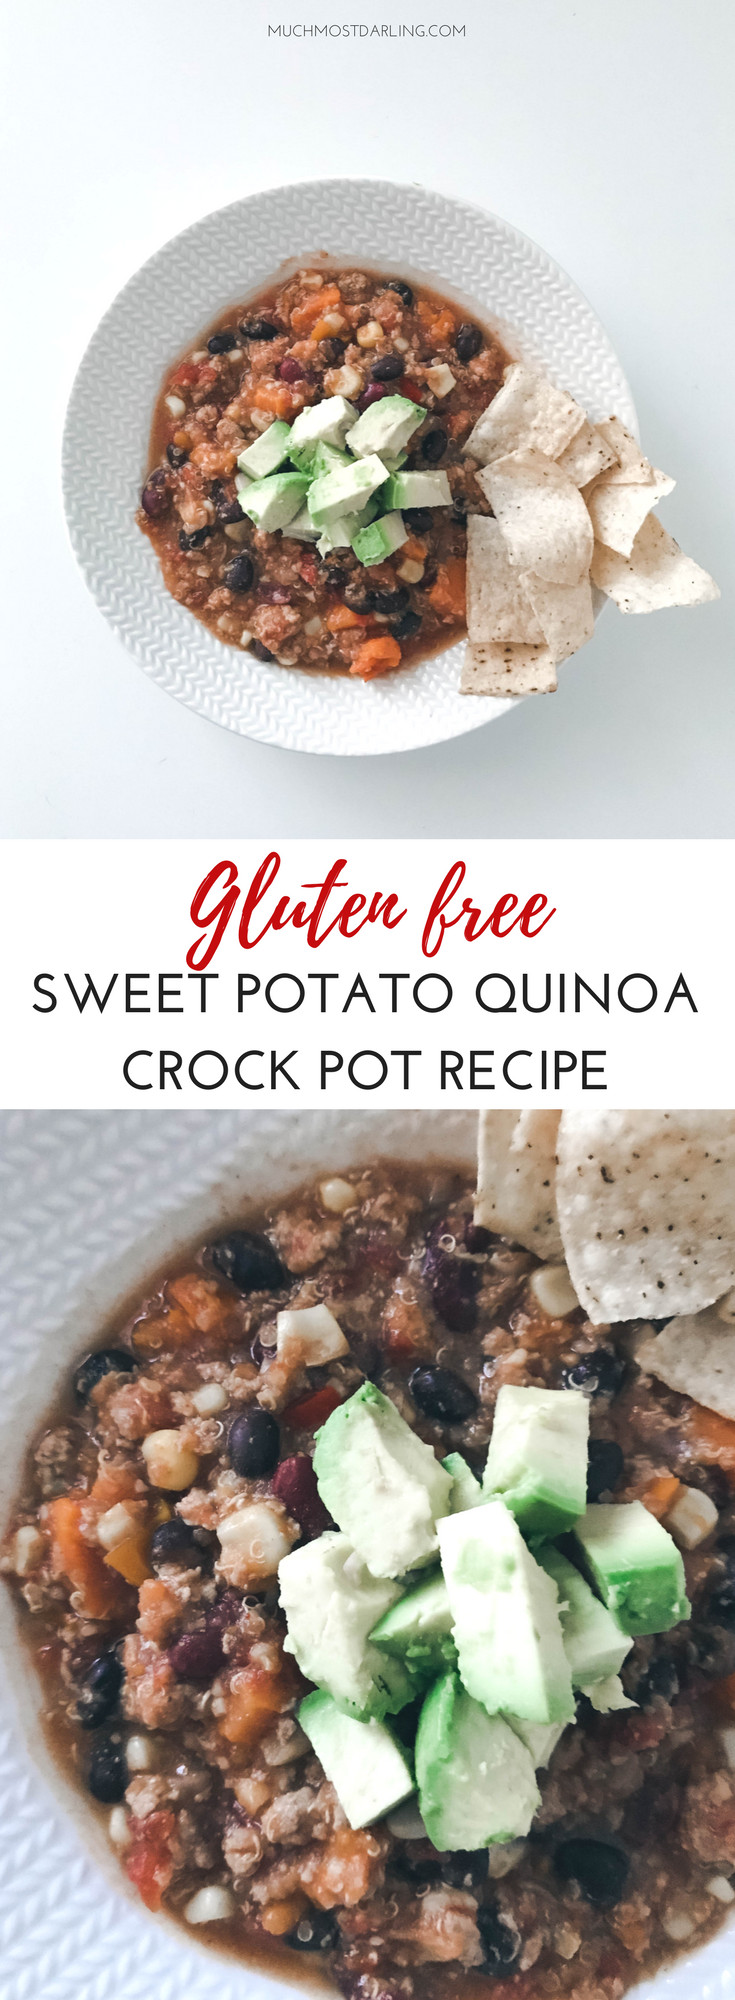 Gluten Free Dairy Free Crock Pot Recipes Gluten Free Crockpot Recipe Sweet Potato & Ground Turkey